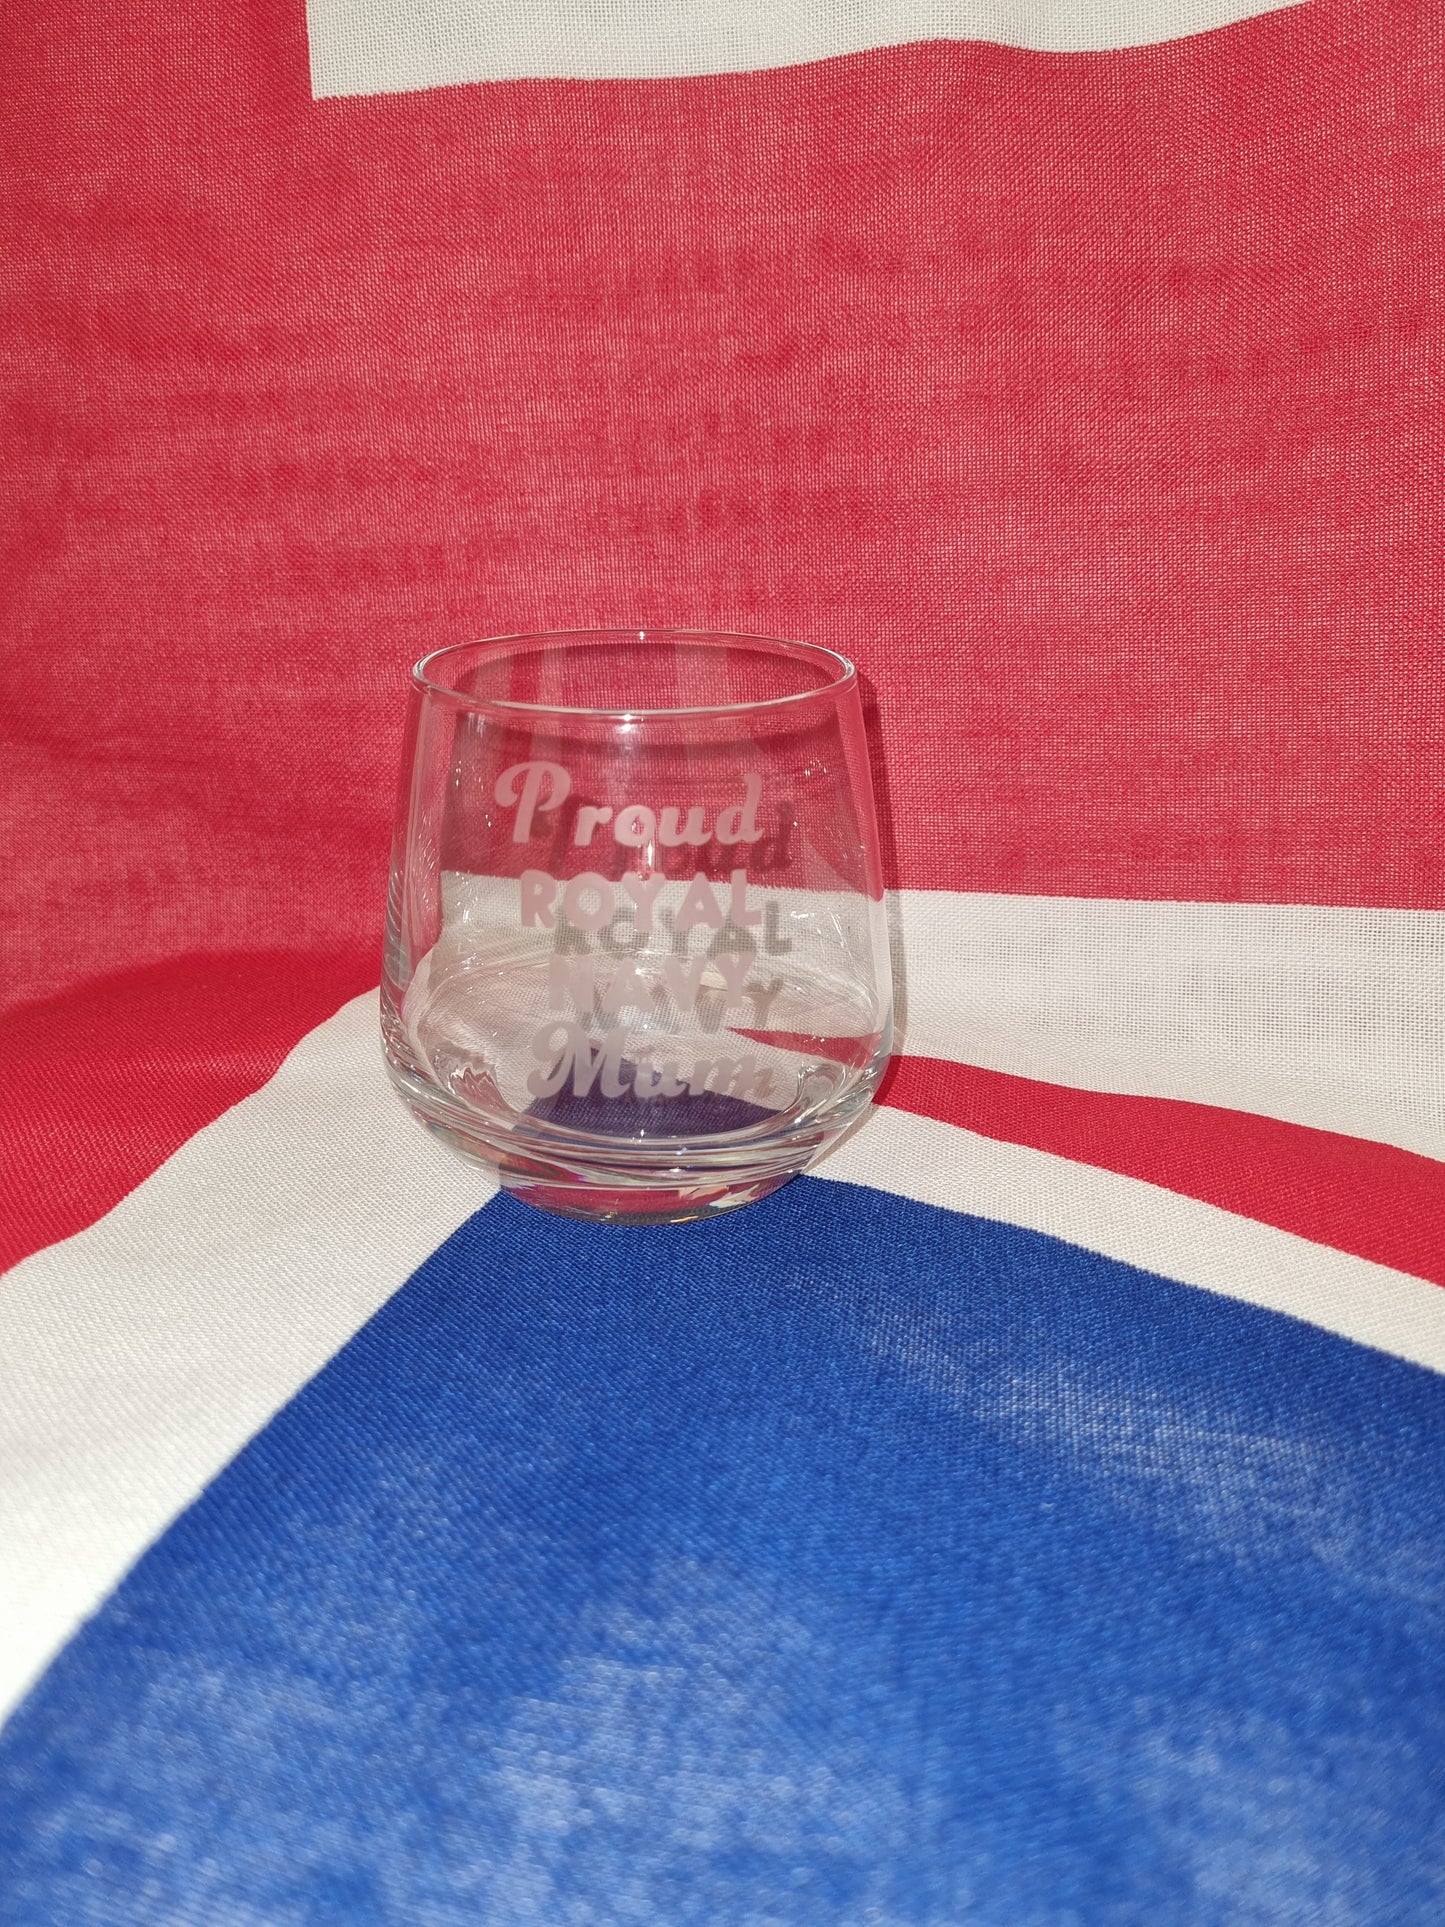 Proud Royal Navy Whiskey Glass